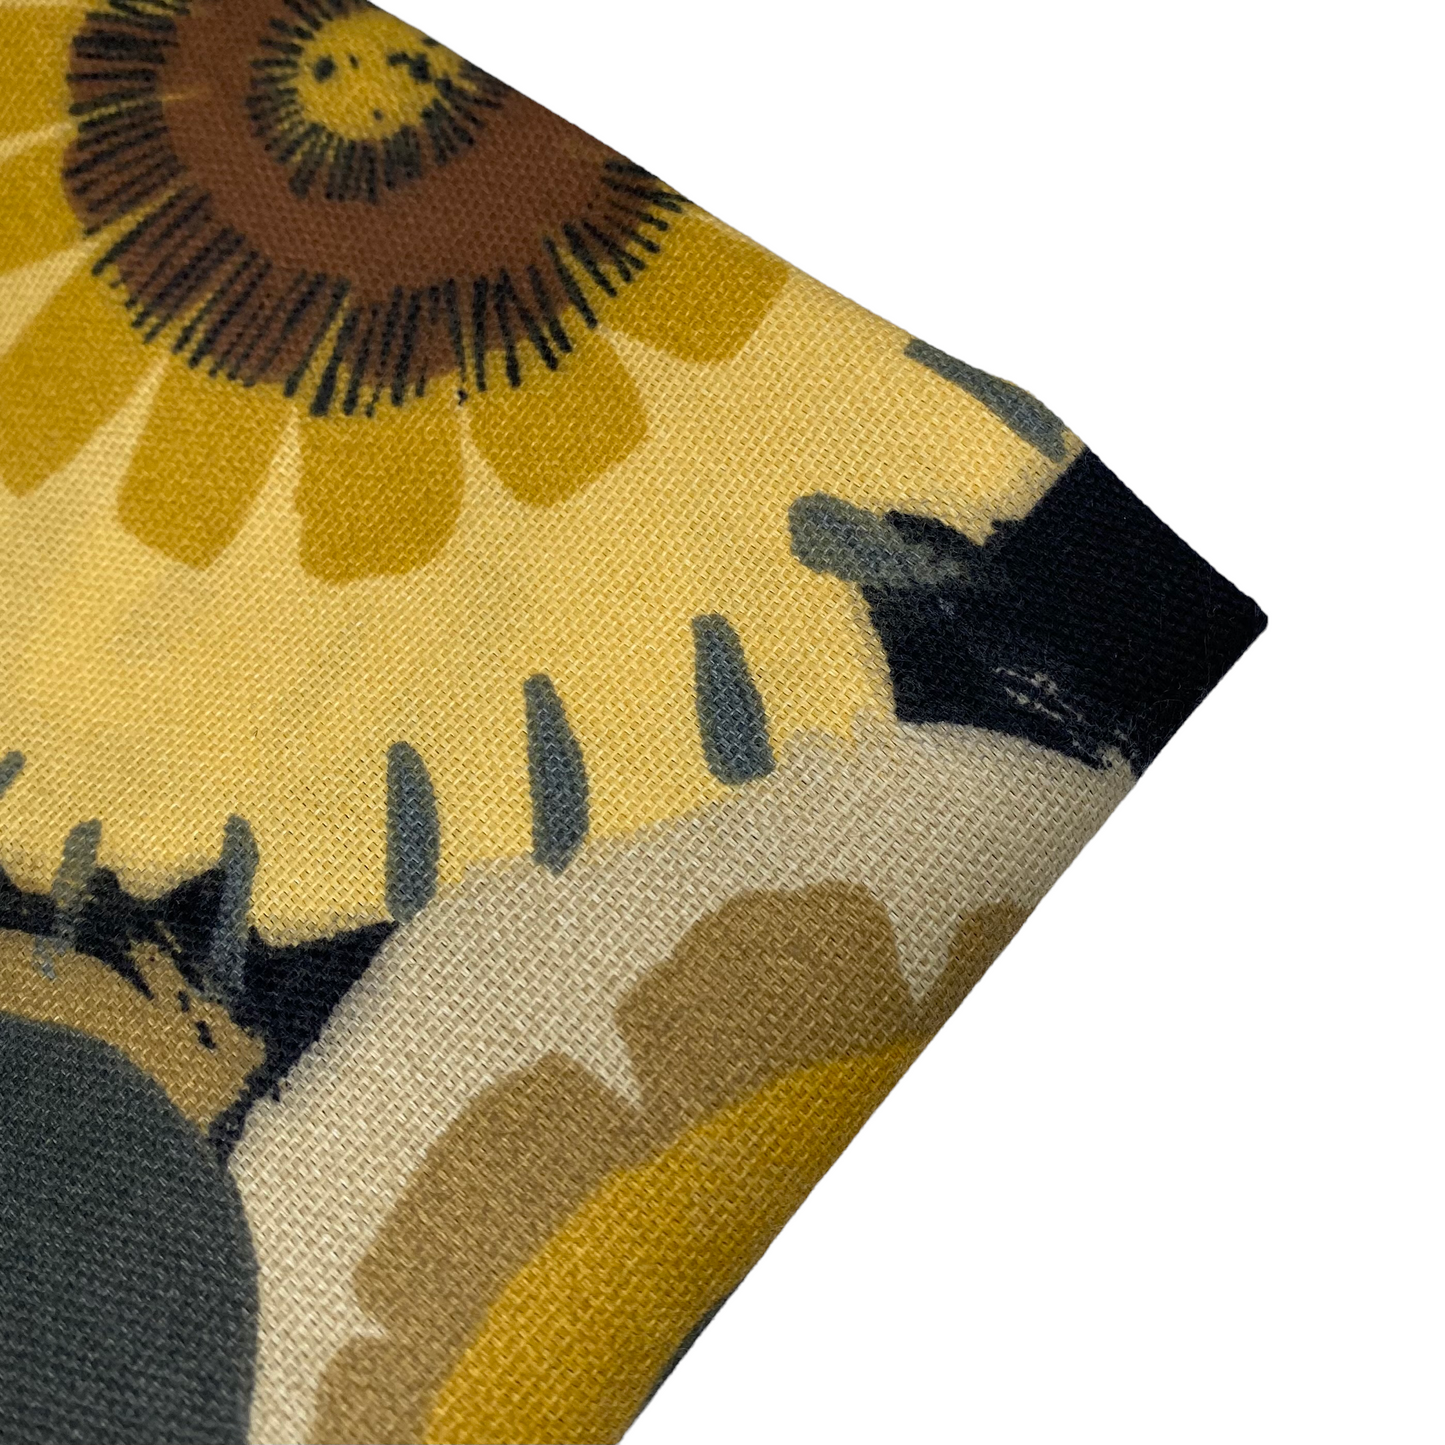 Floral Indoor/Outdoor Upholstery - 56” - Black/Yellow